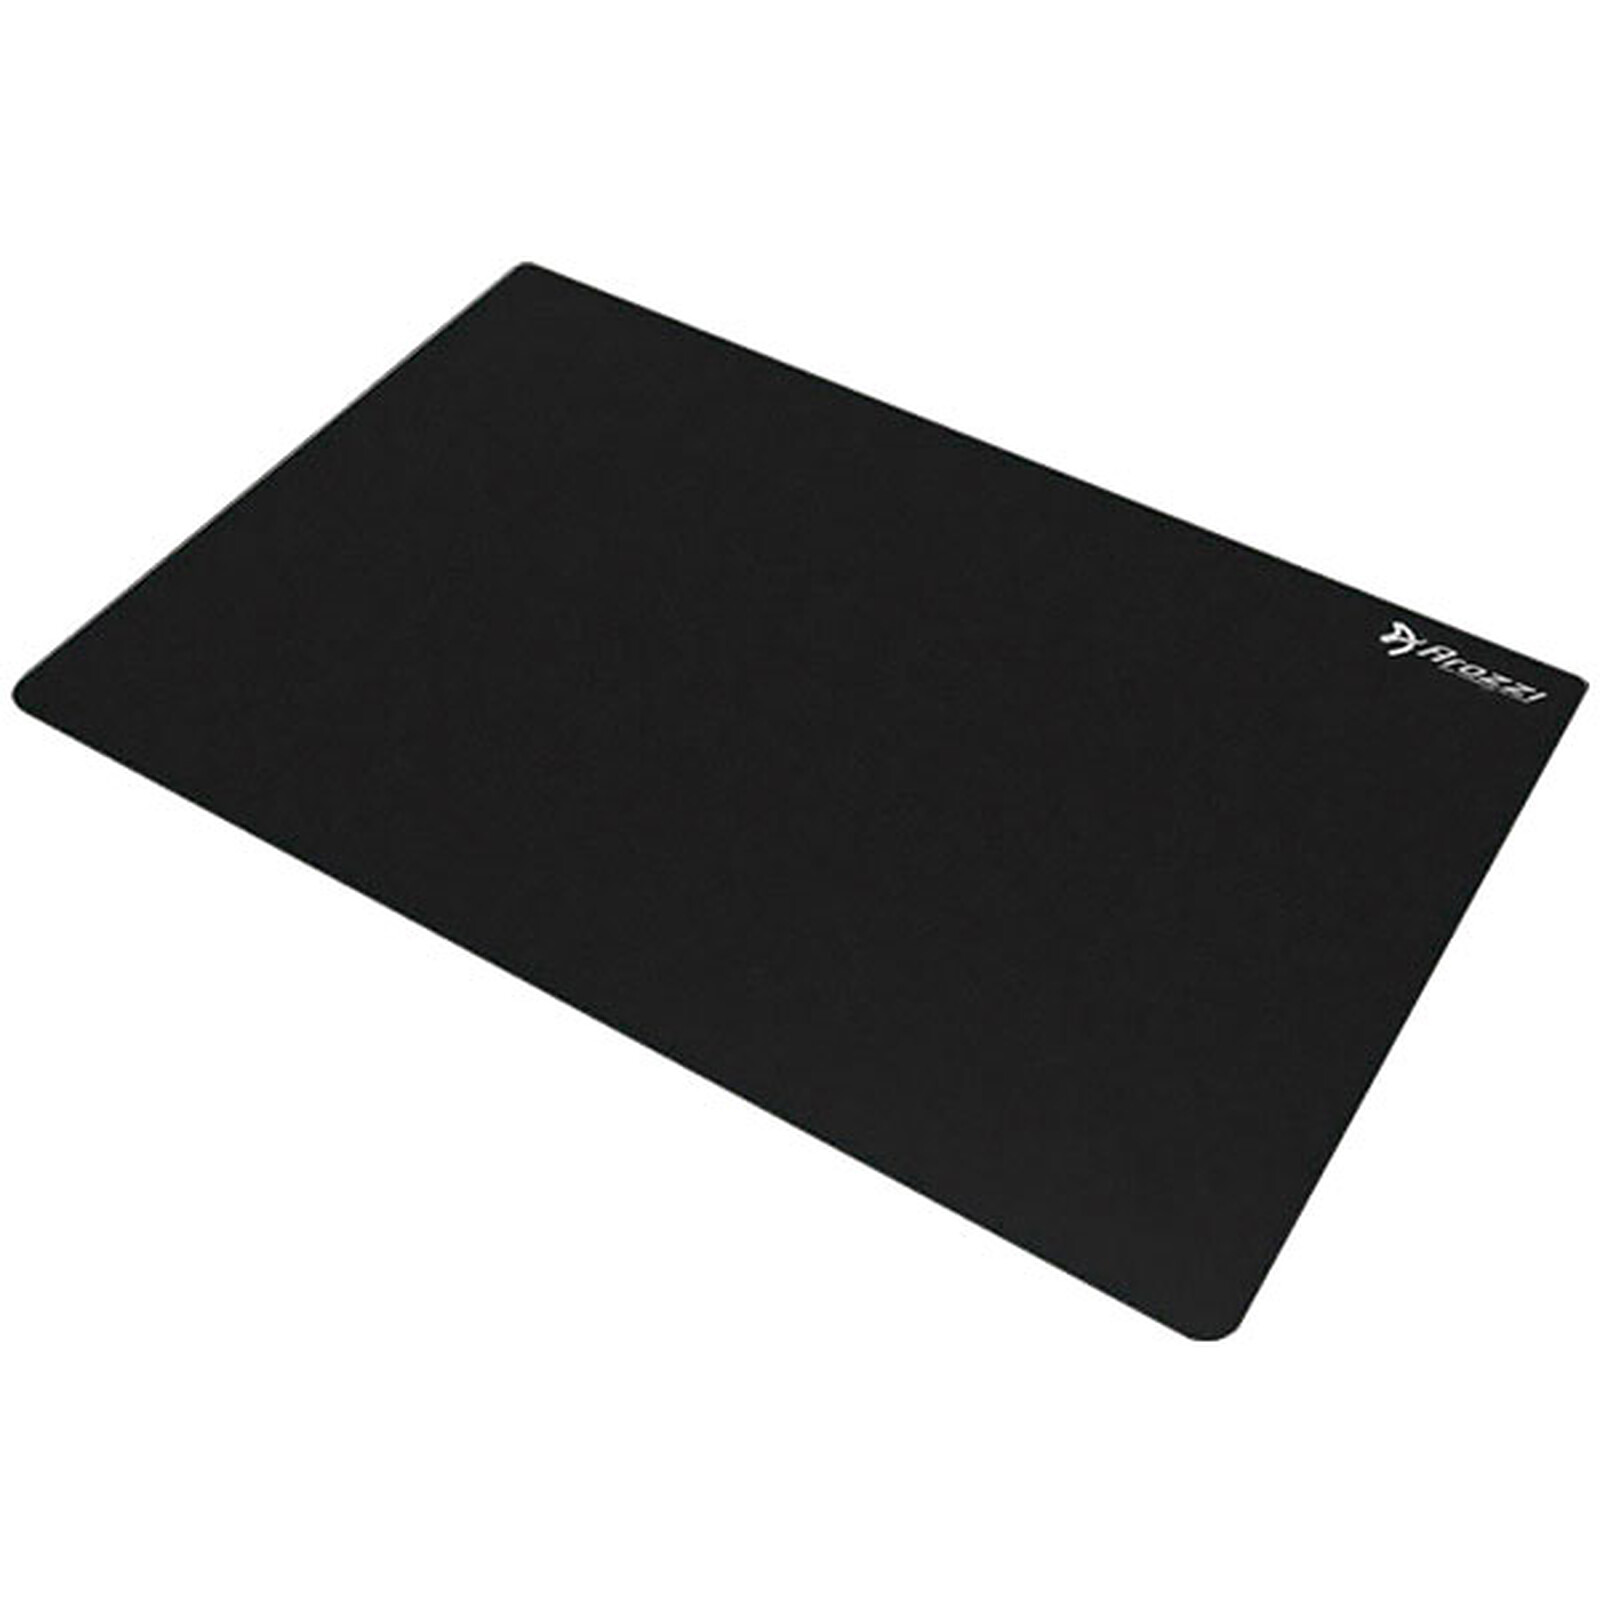 Arozzi Arena Leggero Deskpad (Black) - Mousepad - LDLC 3-year warranty ...